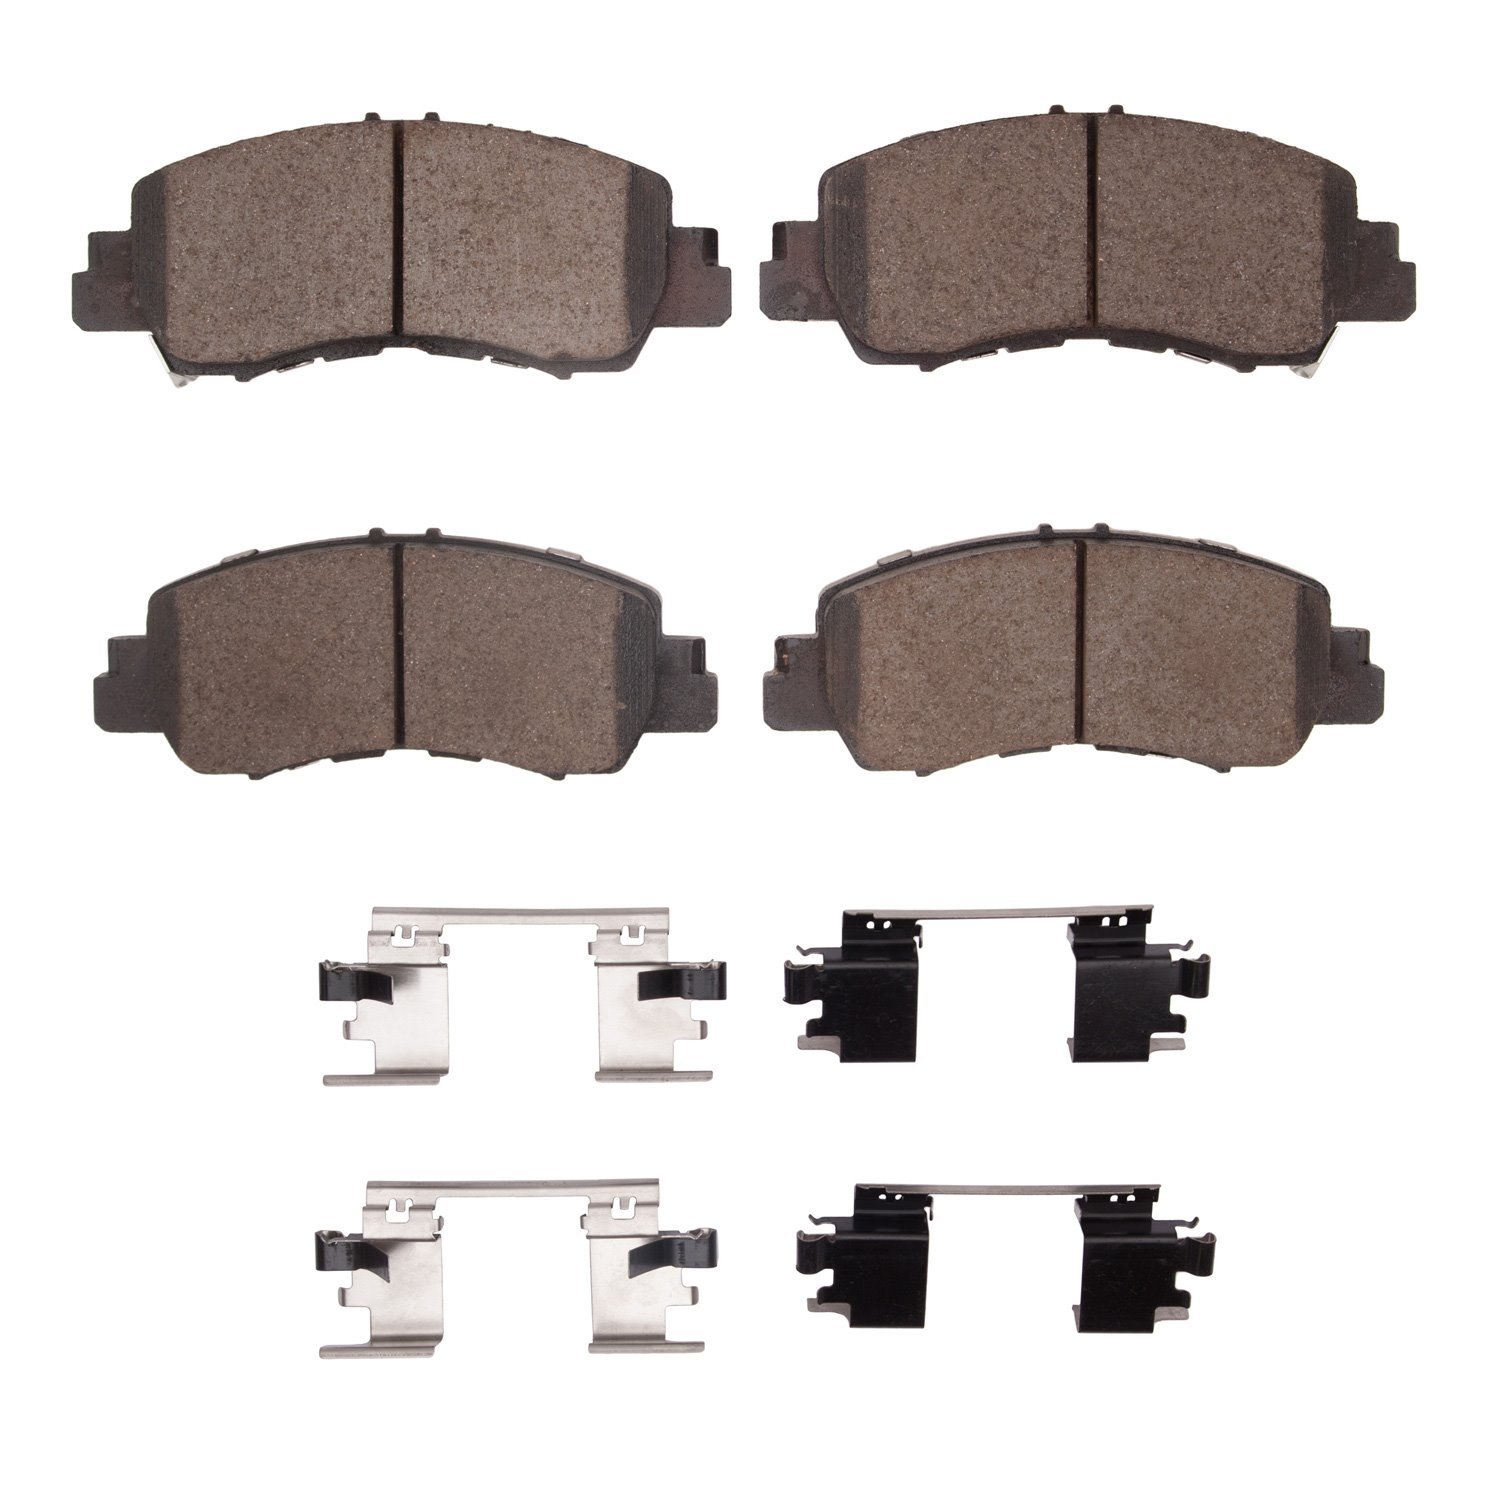 1551-2178-01 5000 Advanced Ceramic Brake Pads & Hardware Kit, Fits Select Mitsubishi, Position: Front